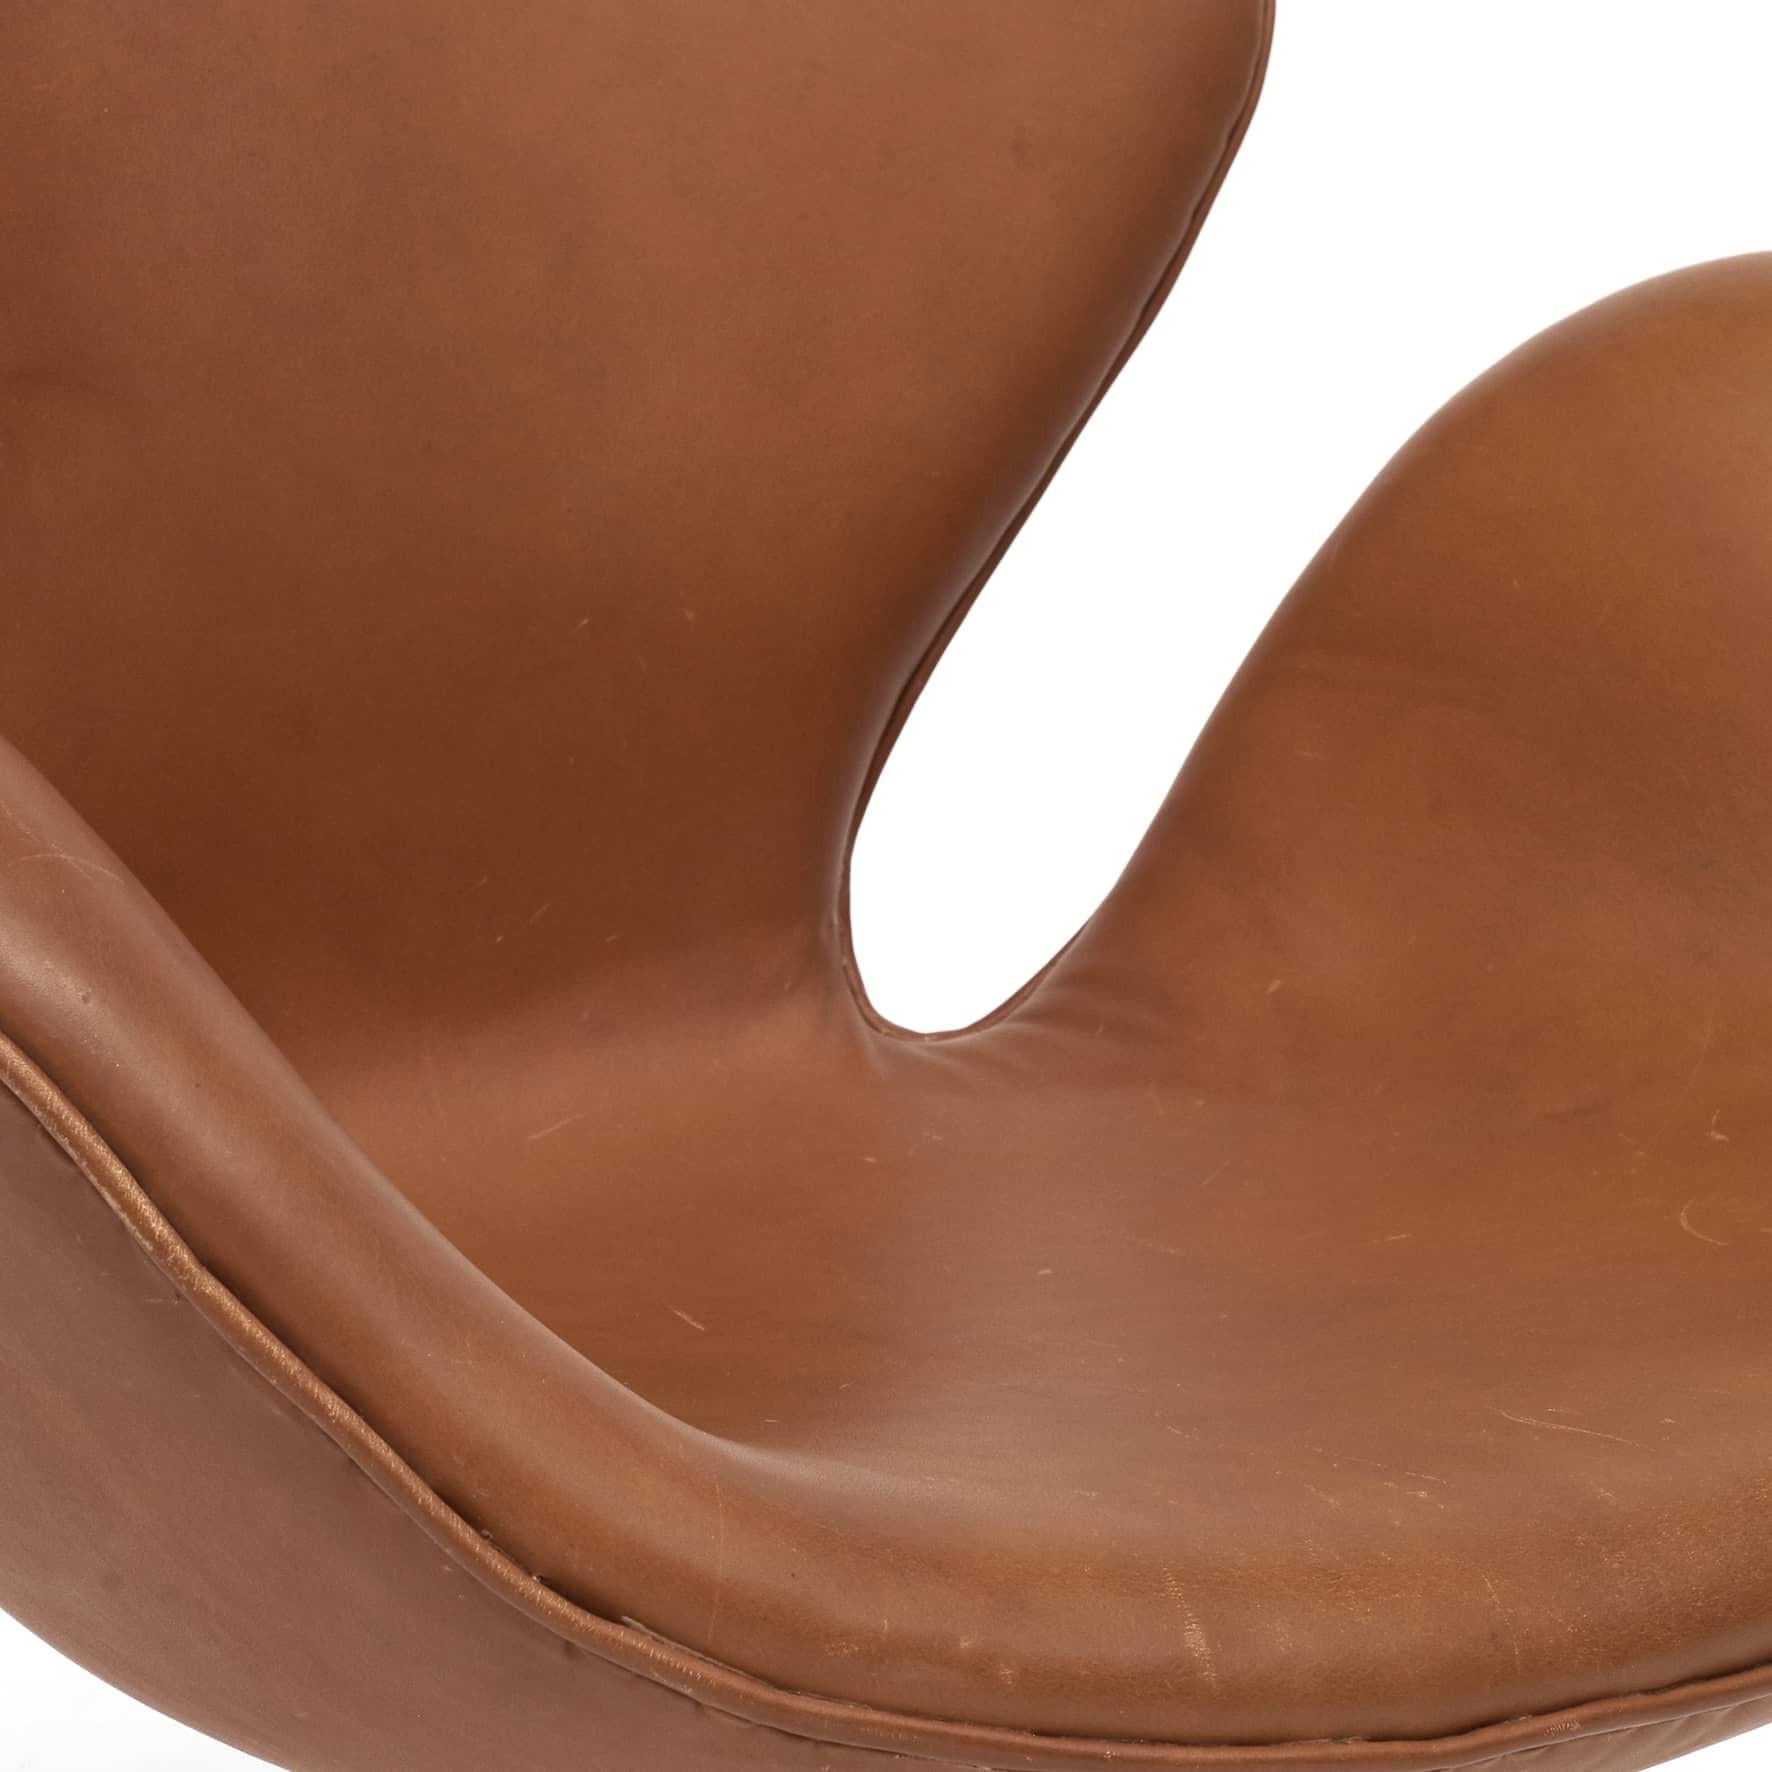 Svanen or Swan Chair by Arne Jacobsen In Good Condition In Kastrup, DK